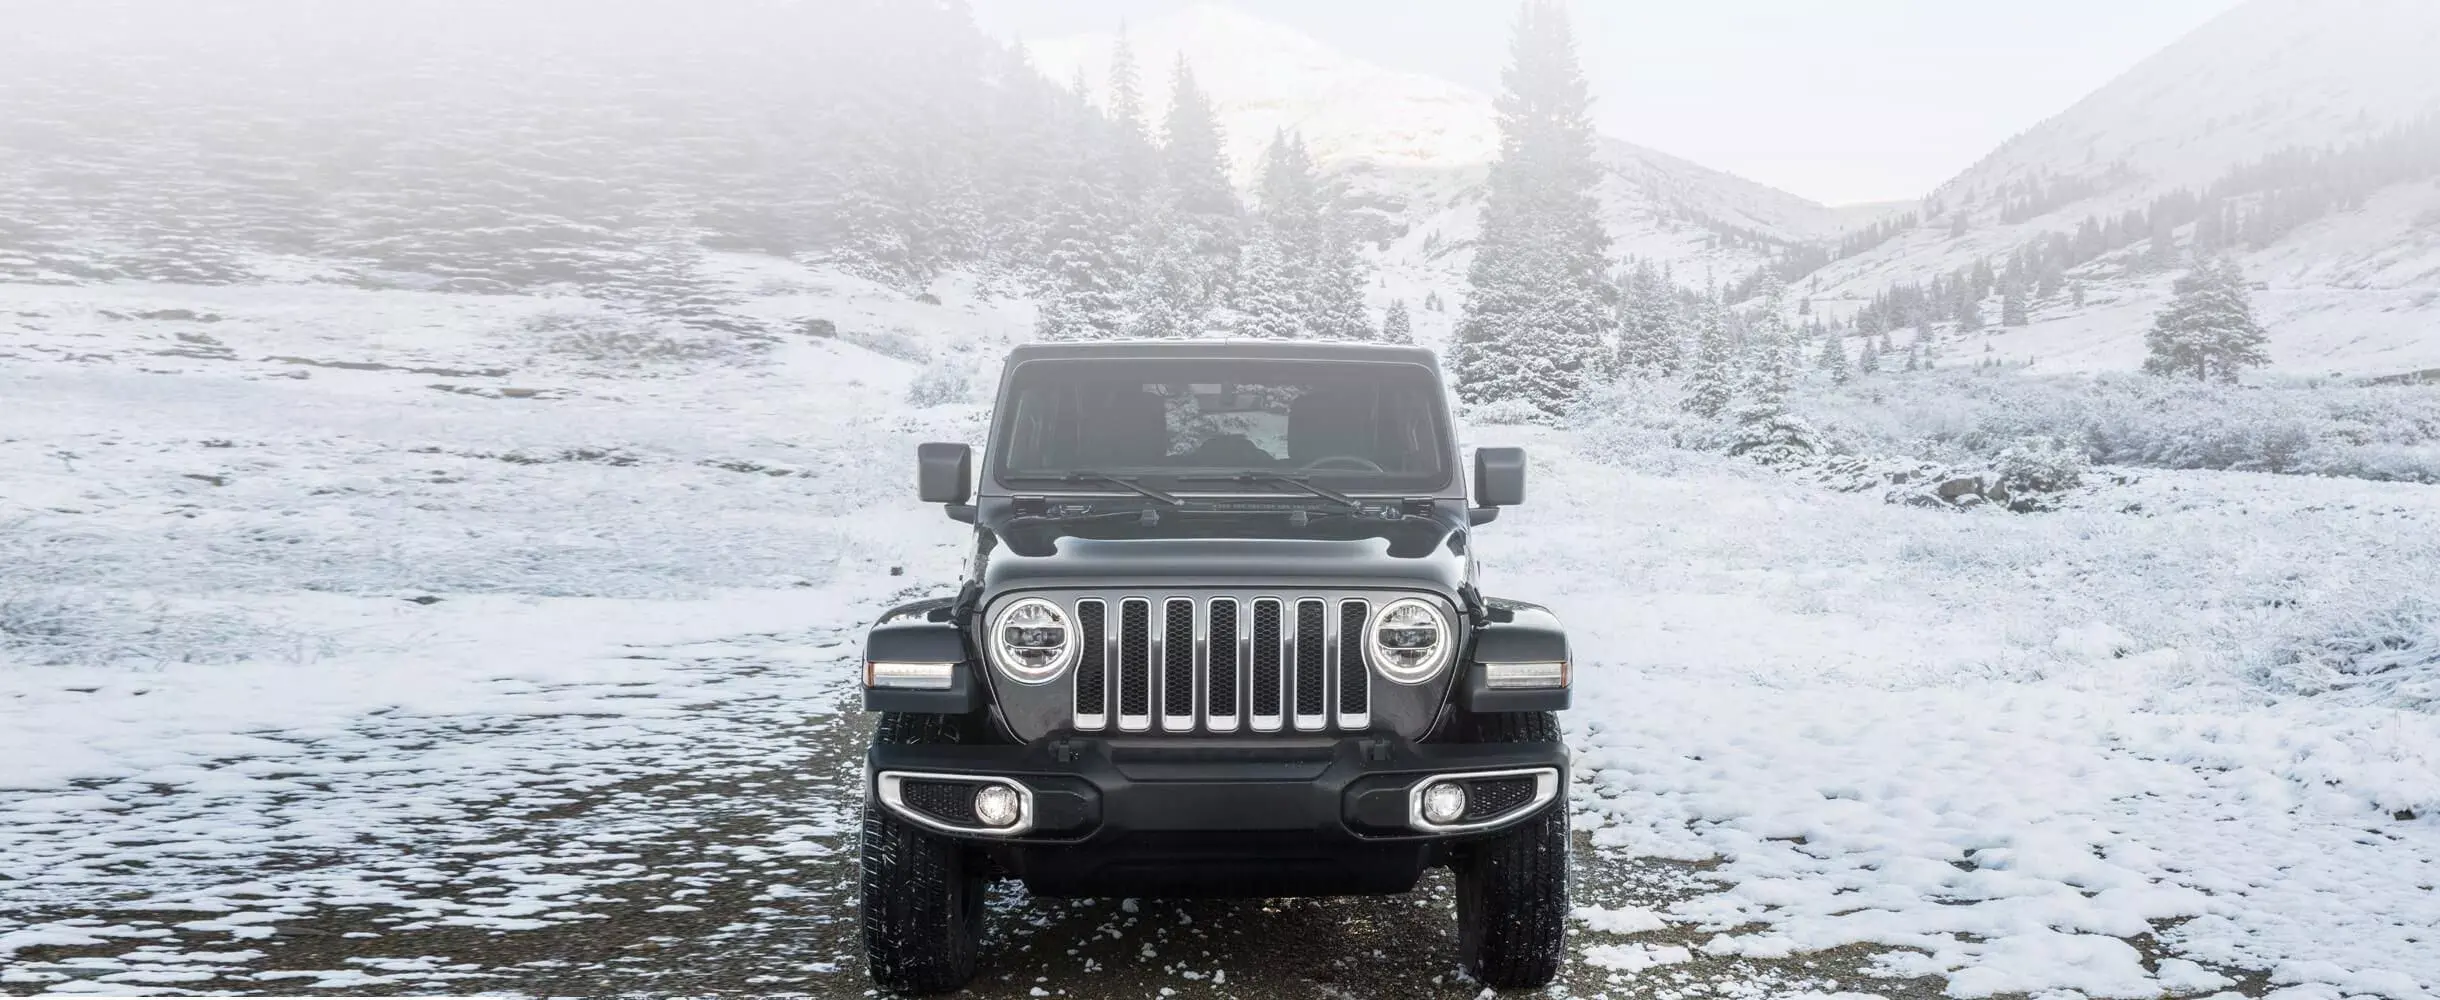 Jeep Wrangler Rental in Denver | Avis Rent a Car